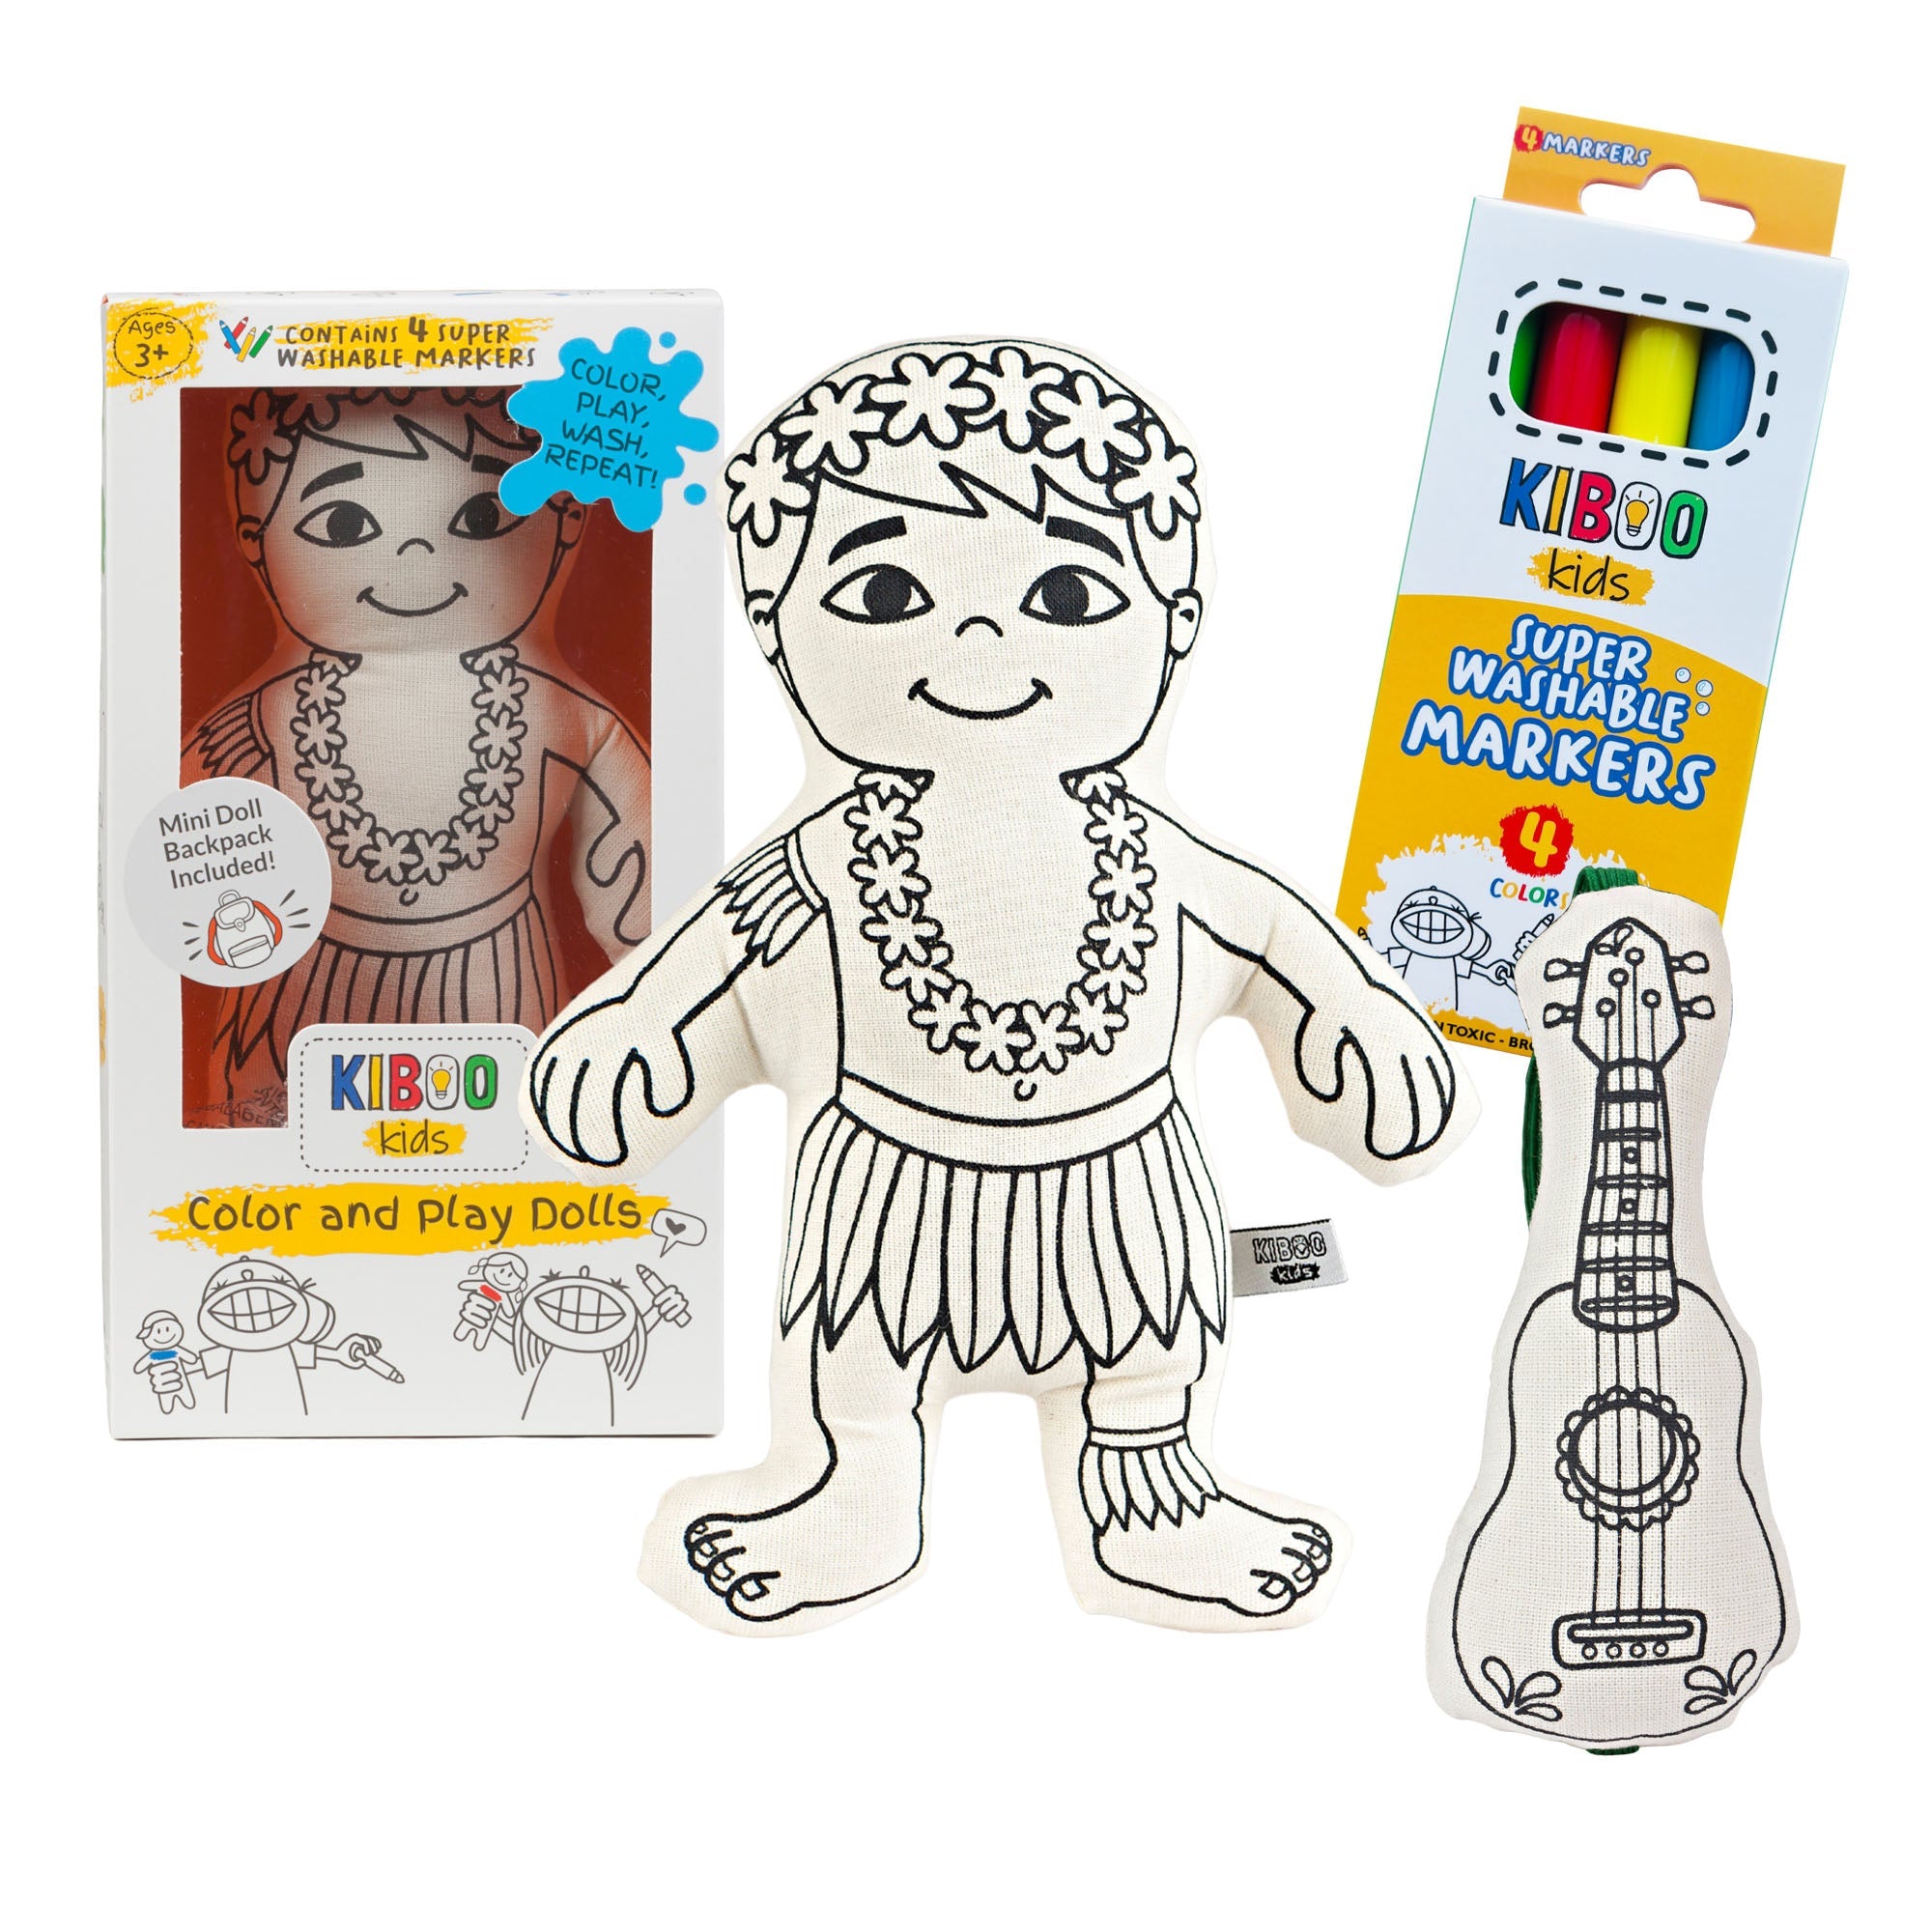 Kiboo Kids: Hula Boy With Mini Ukulele - Colorable And Washable Doll For Creative Play